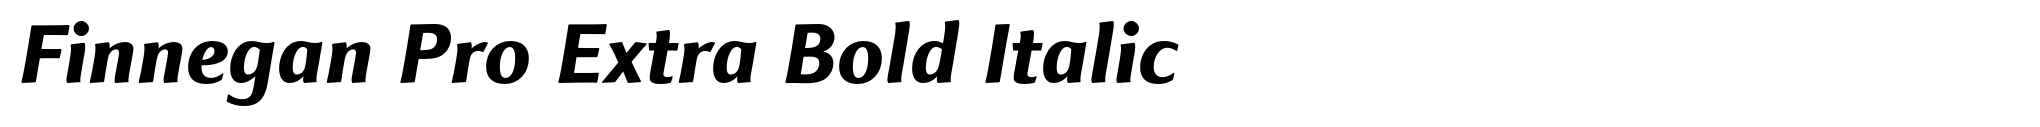 Finnegan Pro Extra Bold Italic image